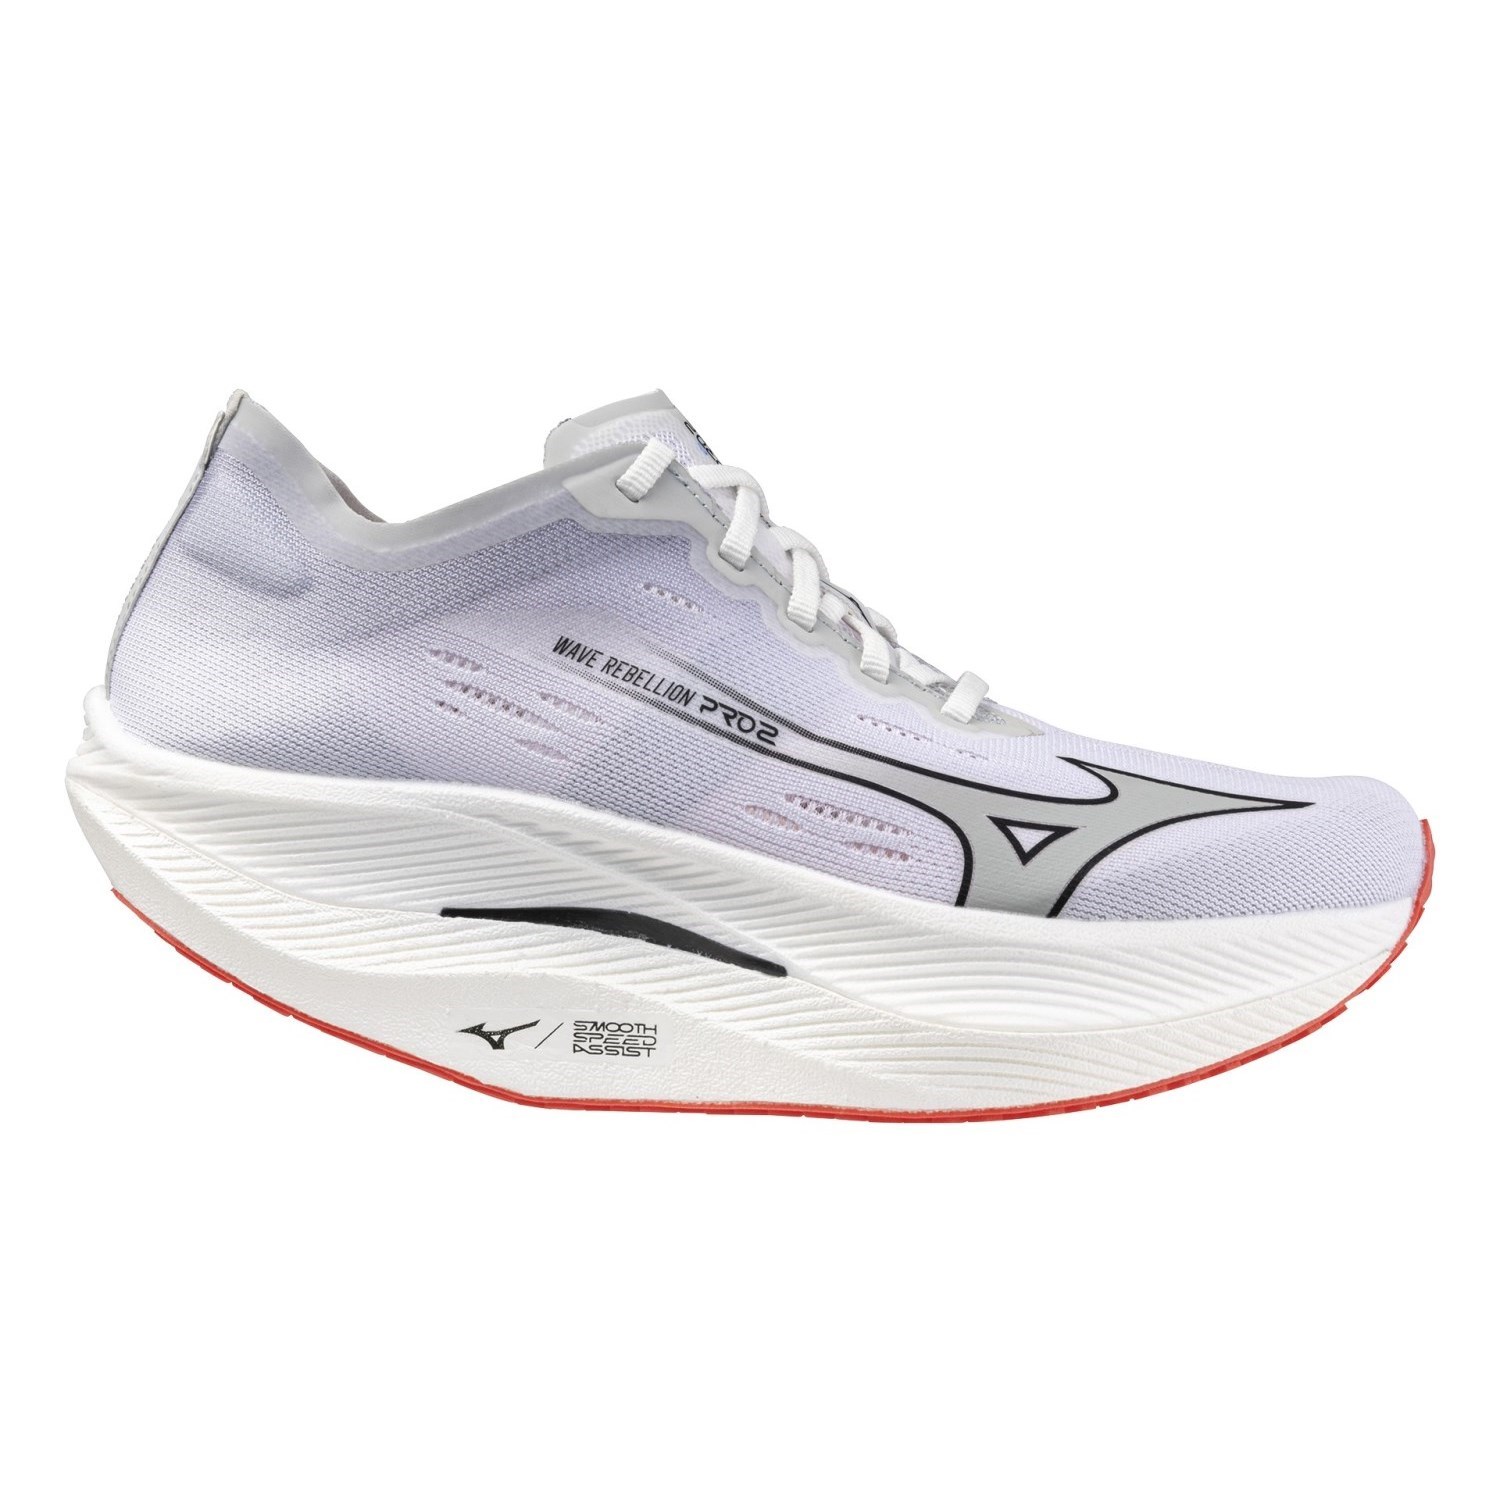 Mizuno Wave Rebellion Pro 2 - Womens Road Racing Shoes - White/Harbor ...